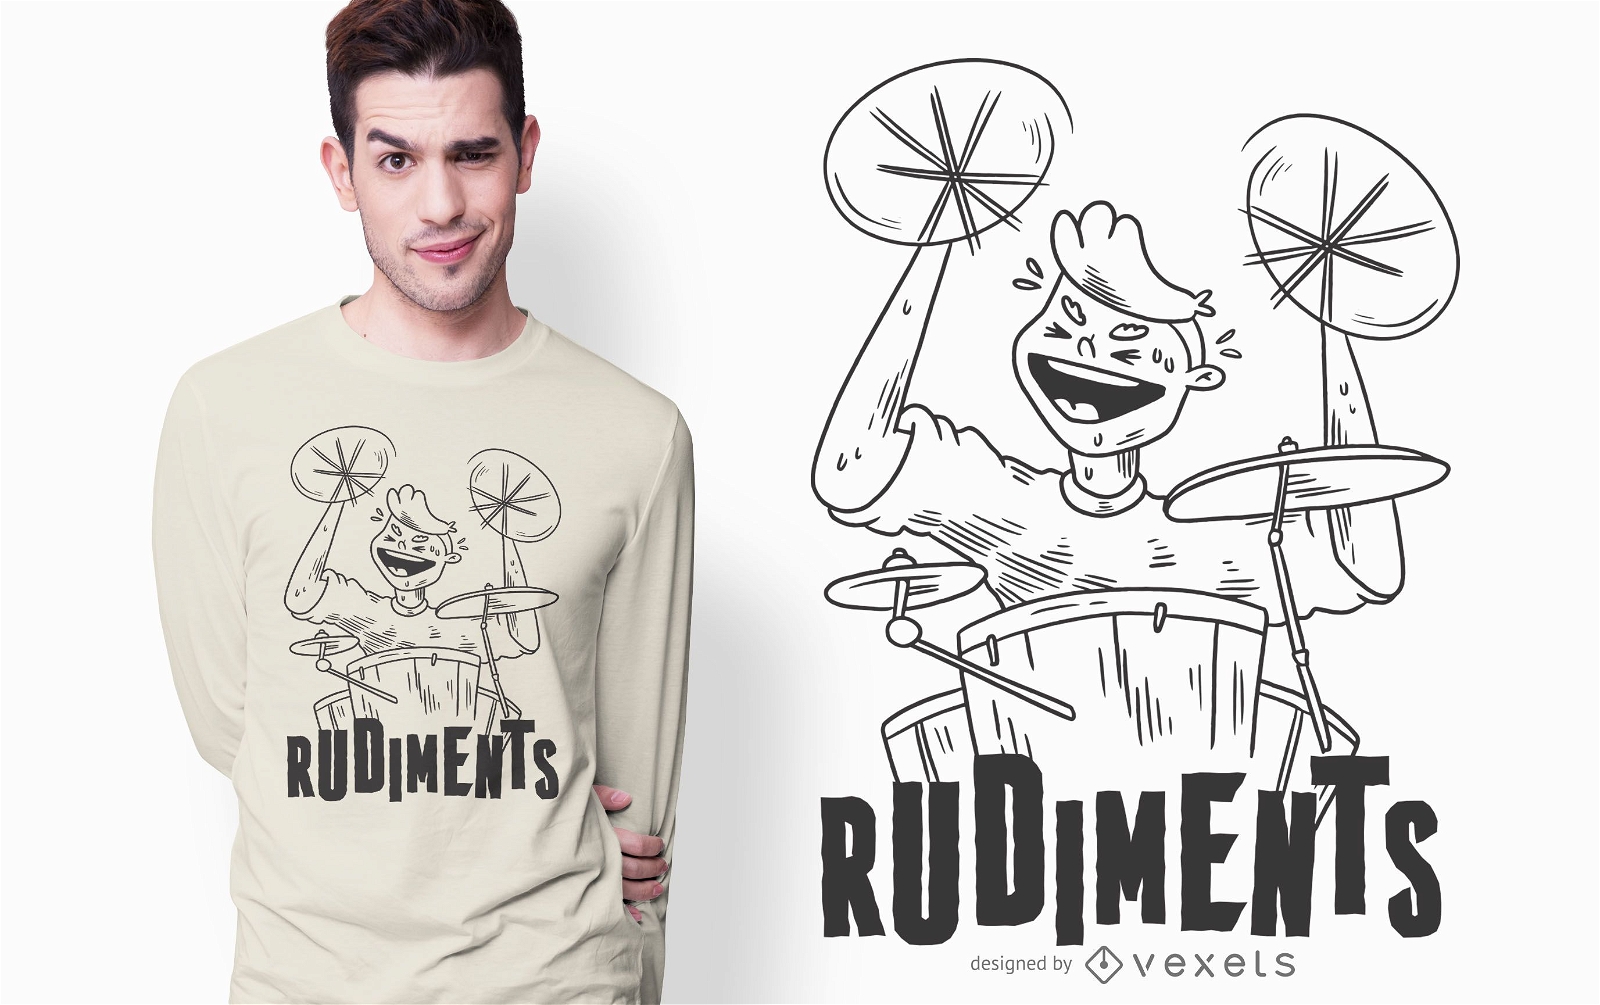 Drum rudiments t-shirt design